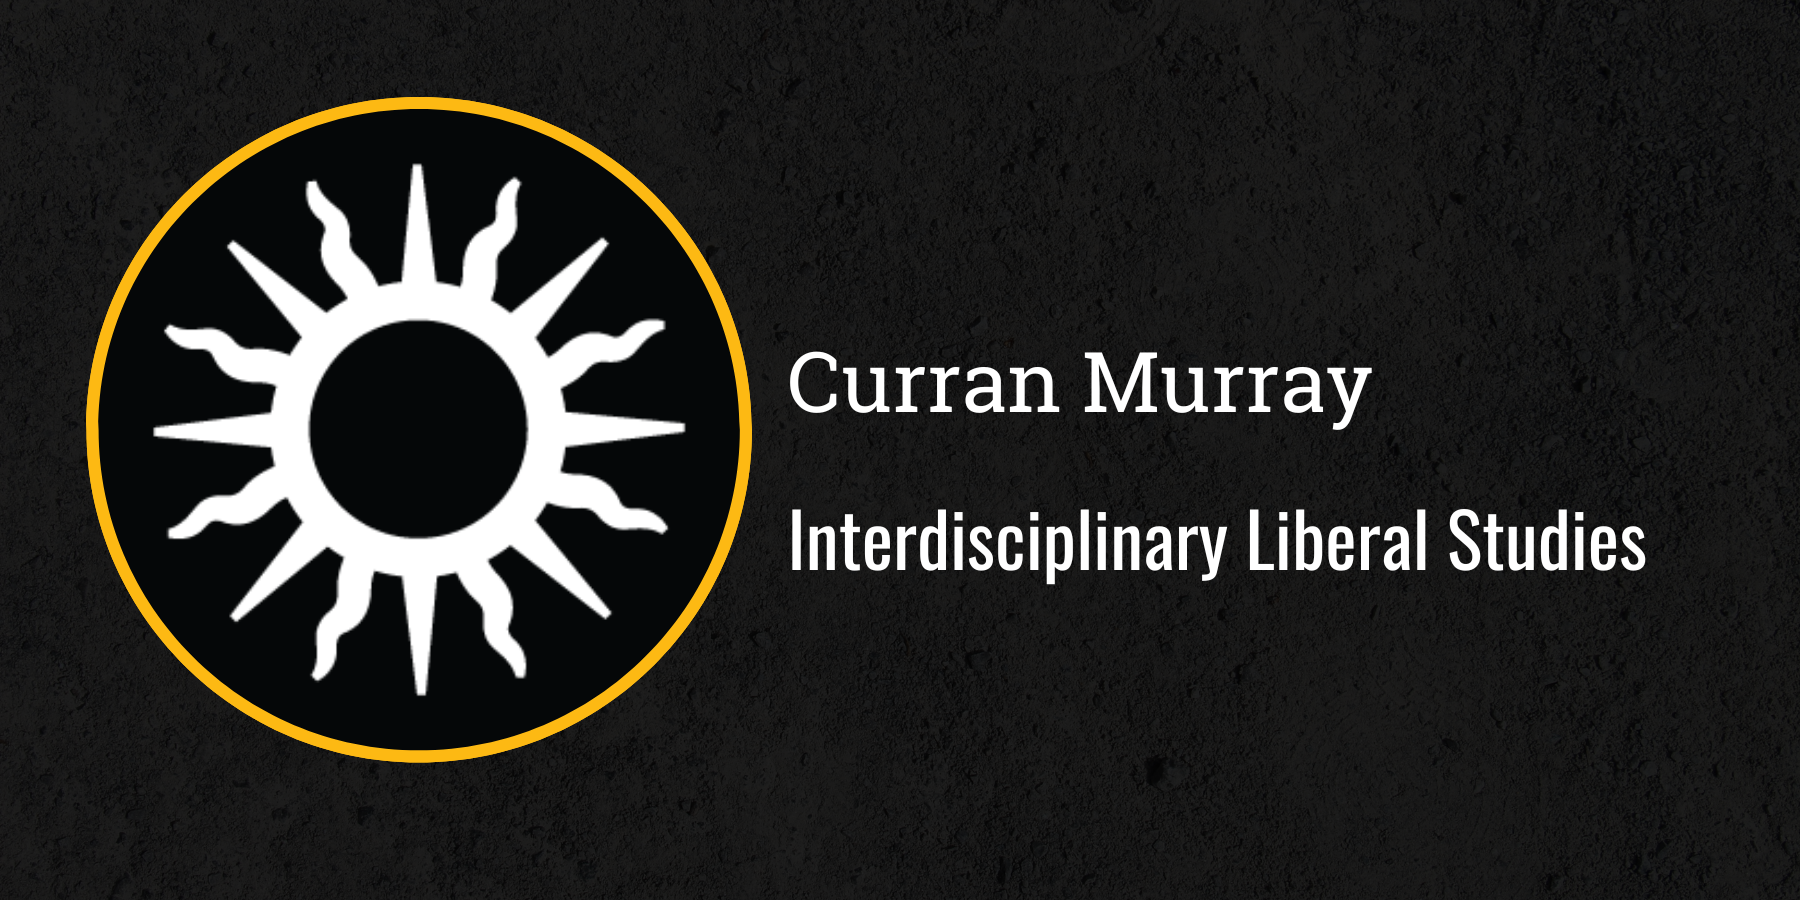 Curran Murray
Interdisciplinary Liberal Studies 